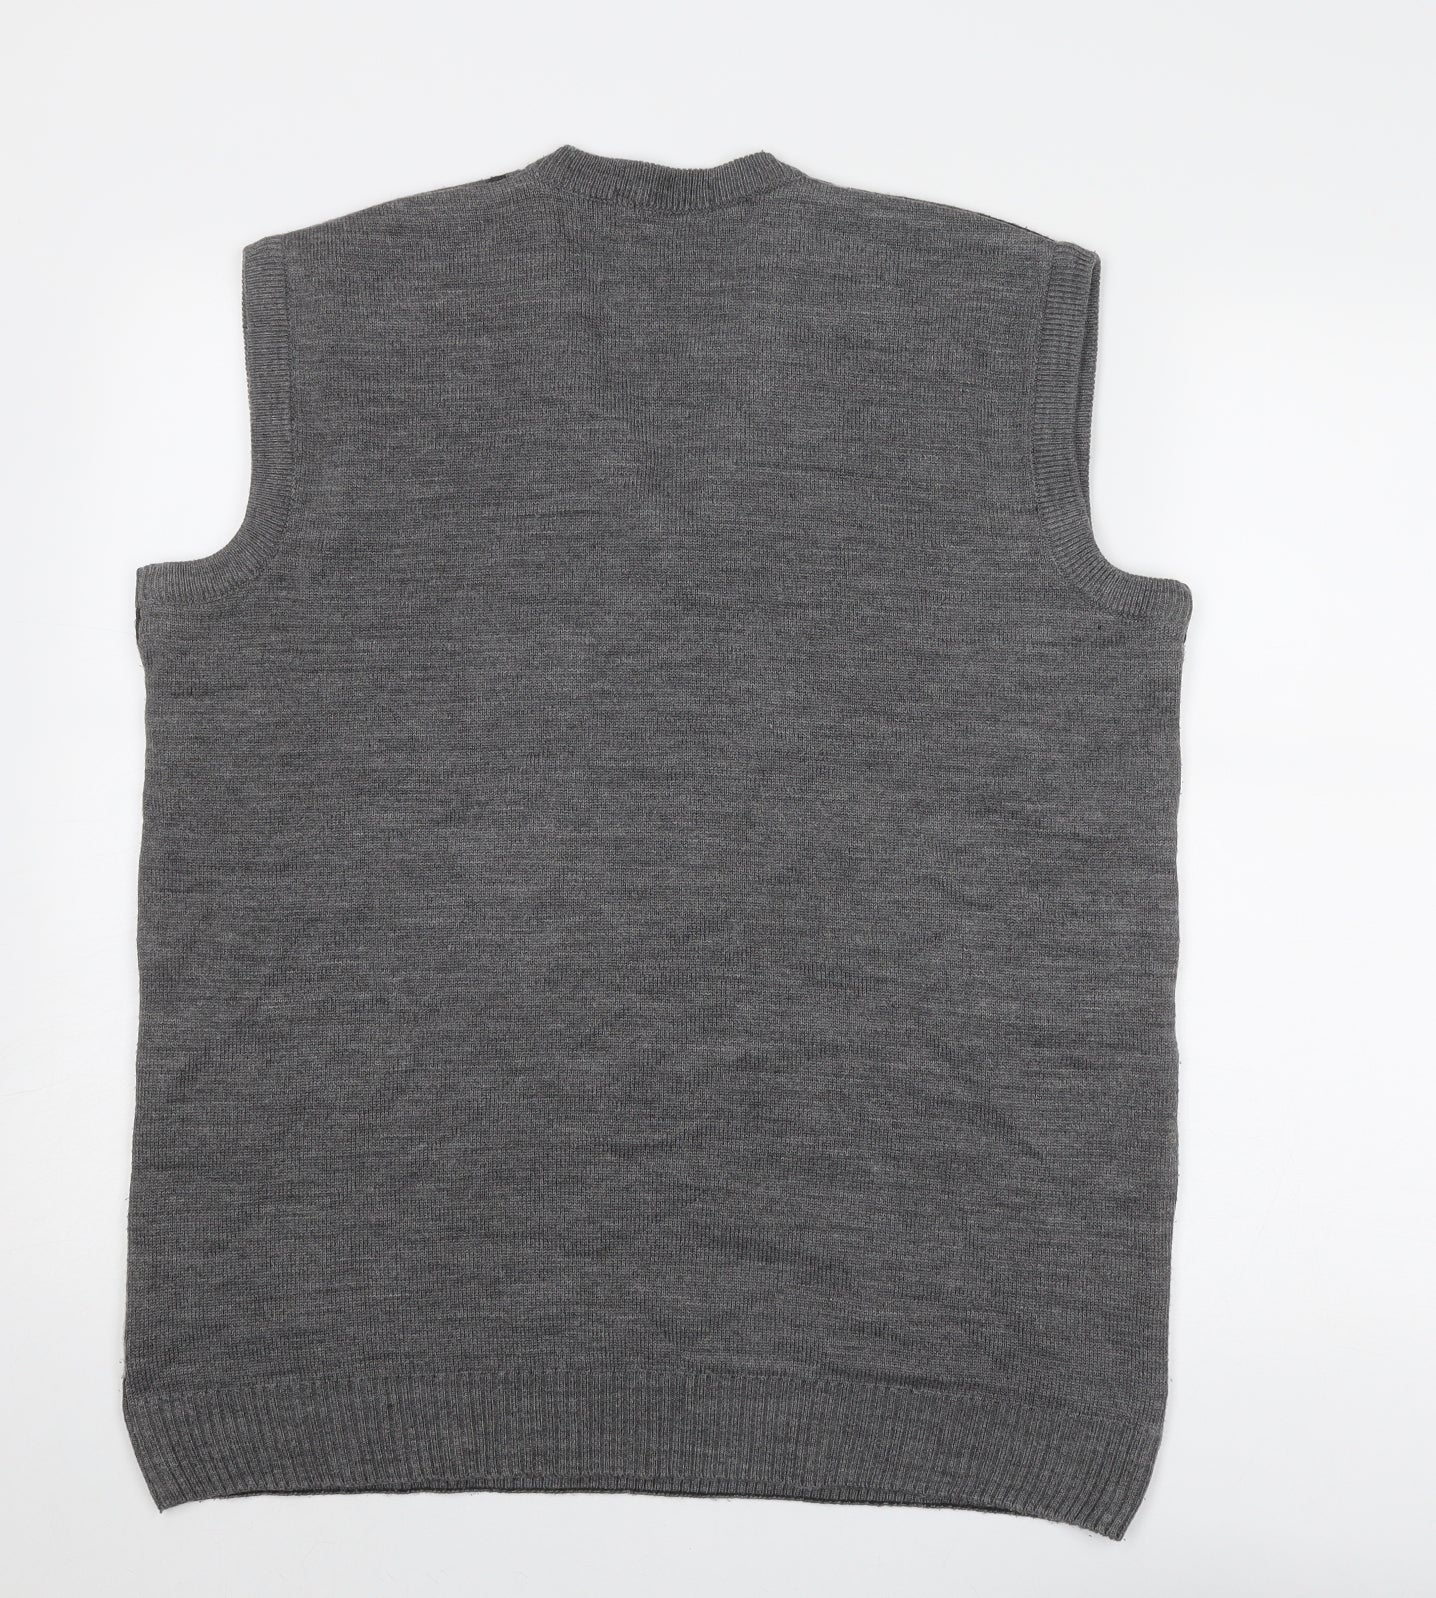 Esquire Mens Grey V-Neck Argyle/Diamond Acrylic Vest Jumper Size XL Sleeveless